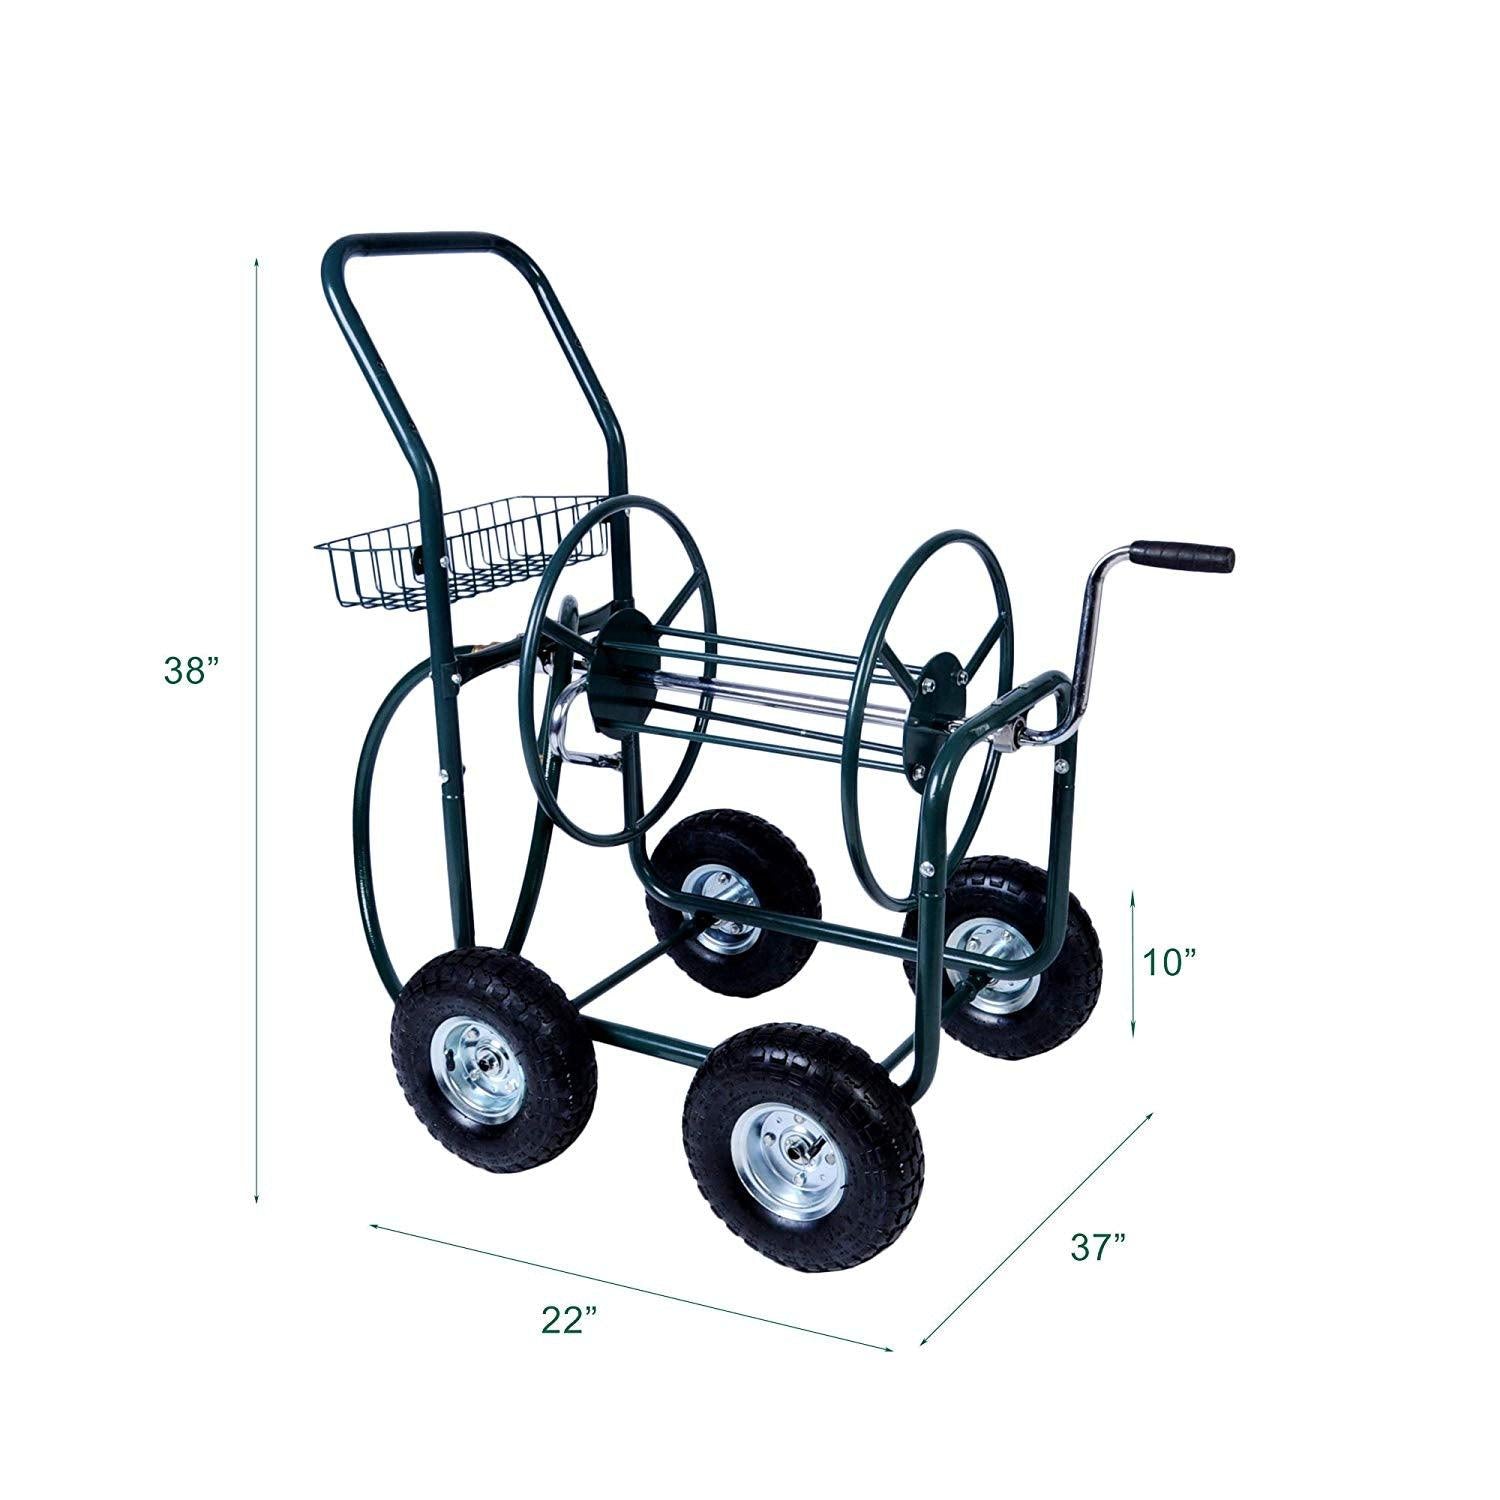 Bosonshop 4 Wheels Heavy Duty Garden Hose Reel Cart with Storage Basket,Holds 390FT Hose